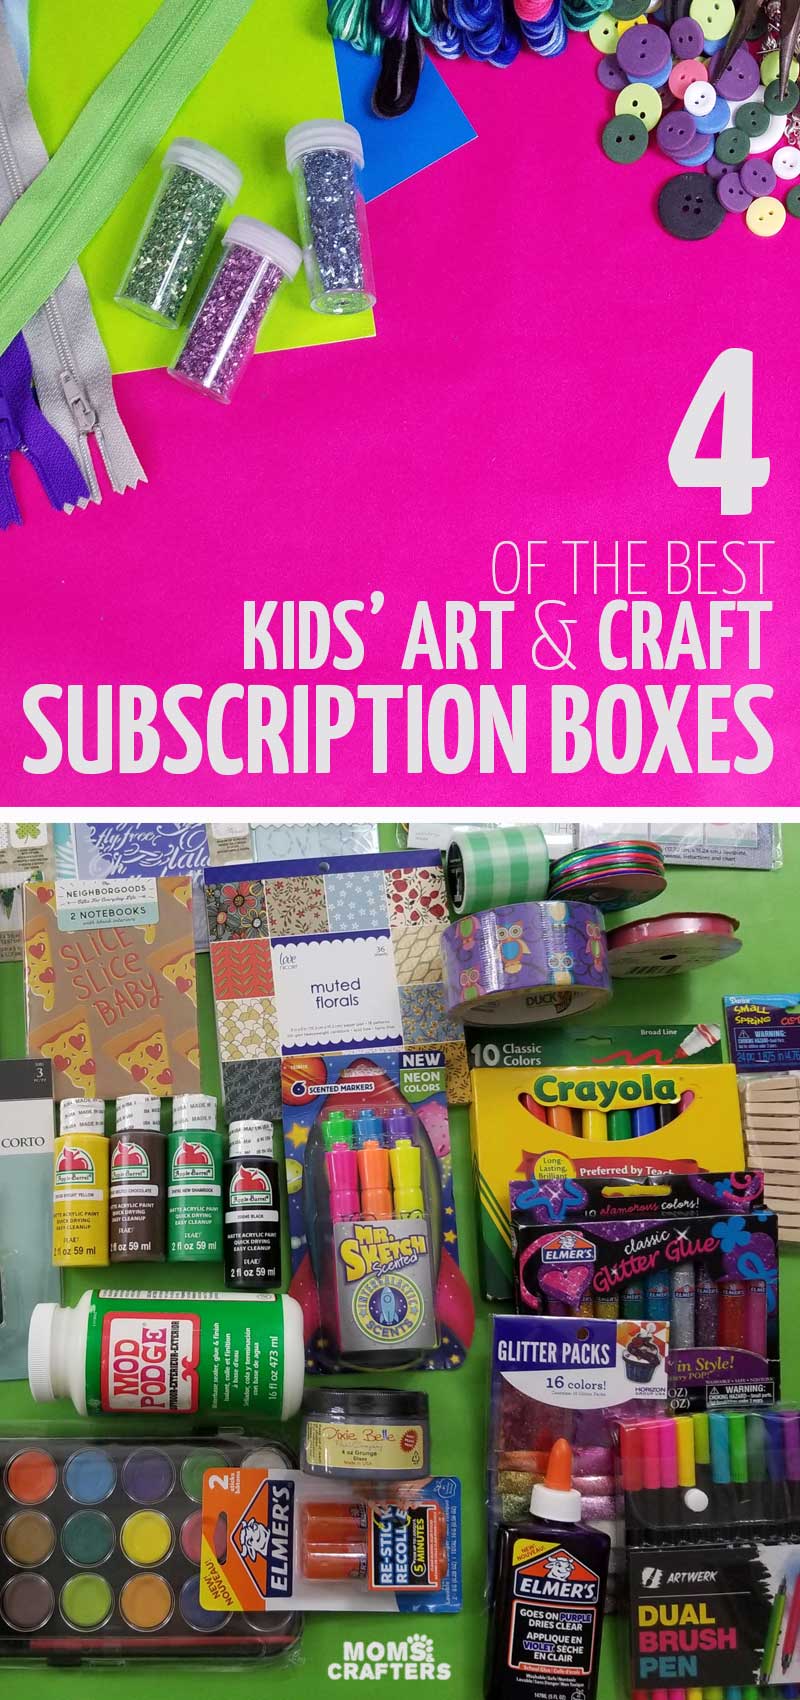 https://www.momsandcrafters.com/wp-content/uploads/2019/02/CRAFT-subscription-boxes-for-kids-2.jpg.webp